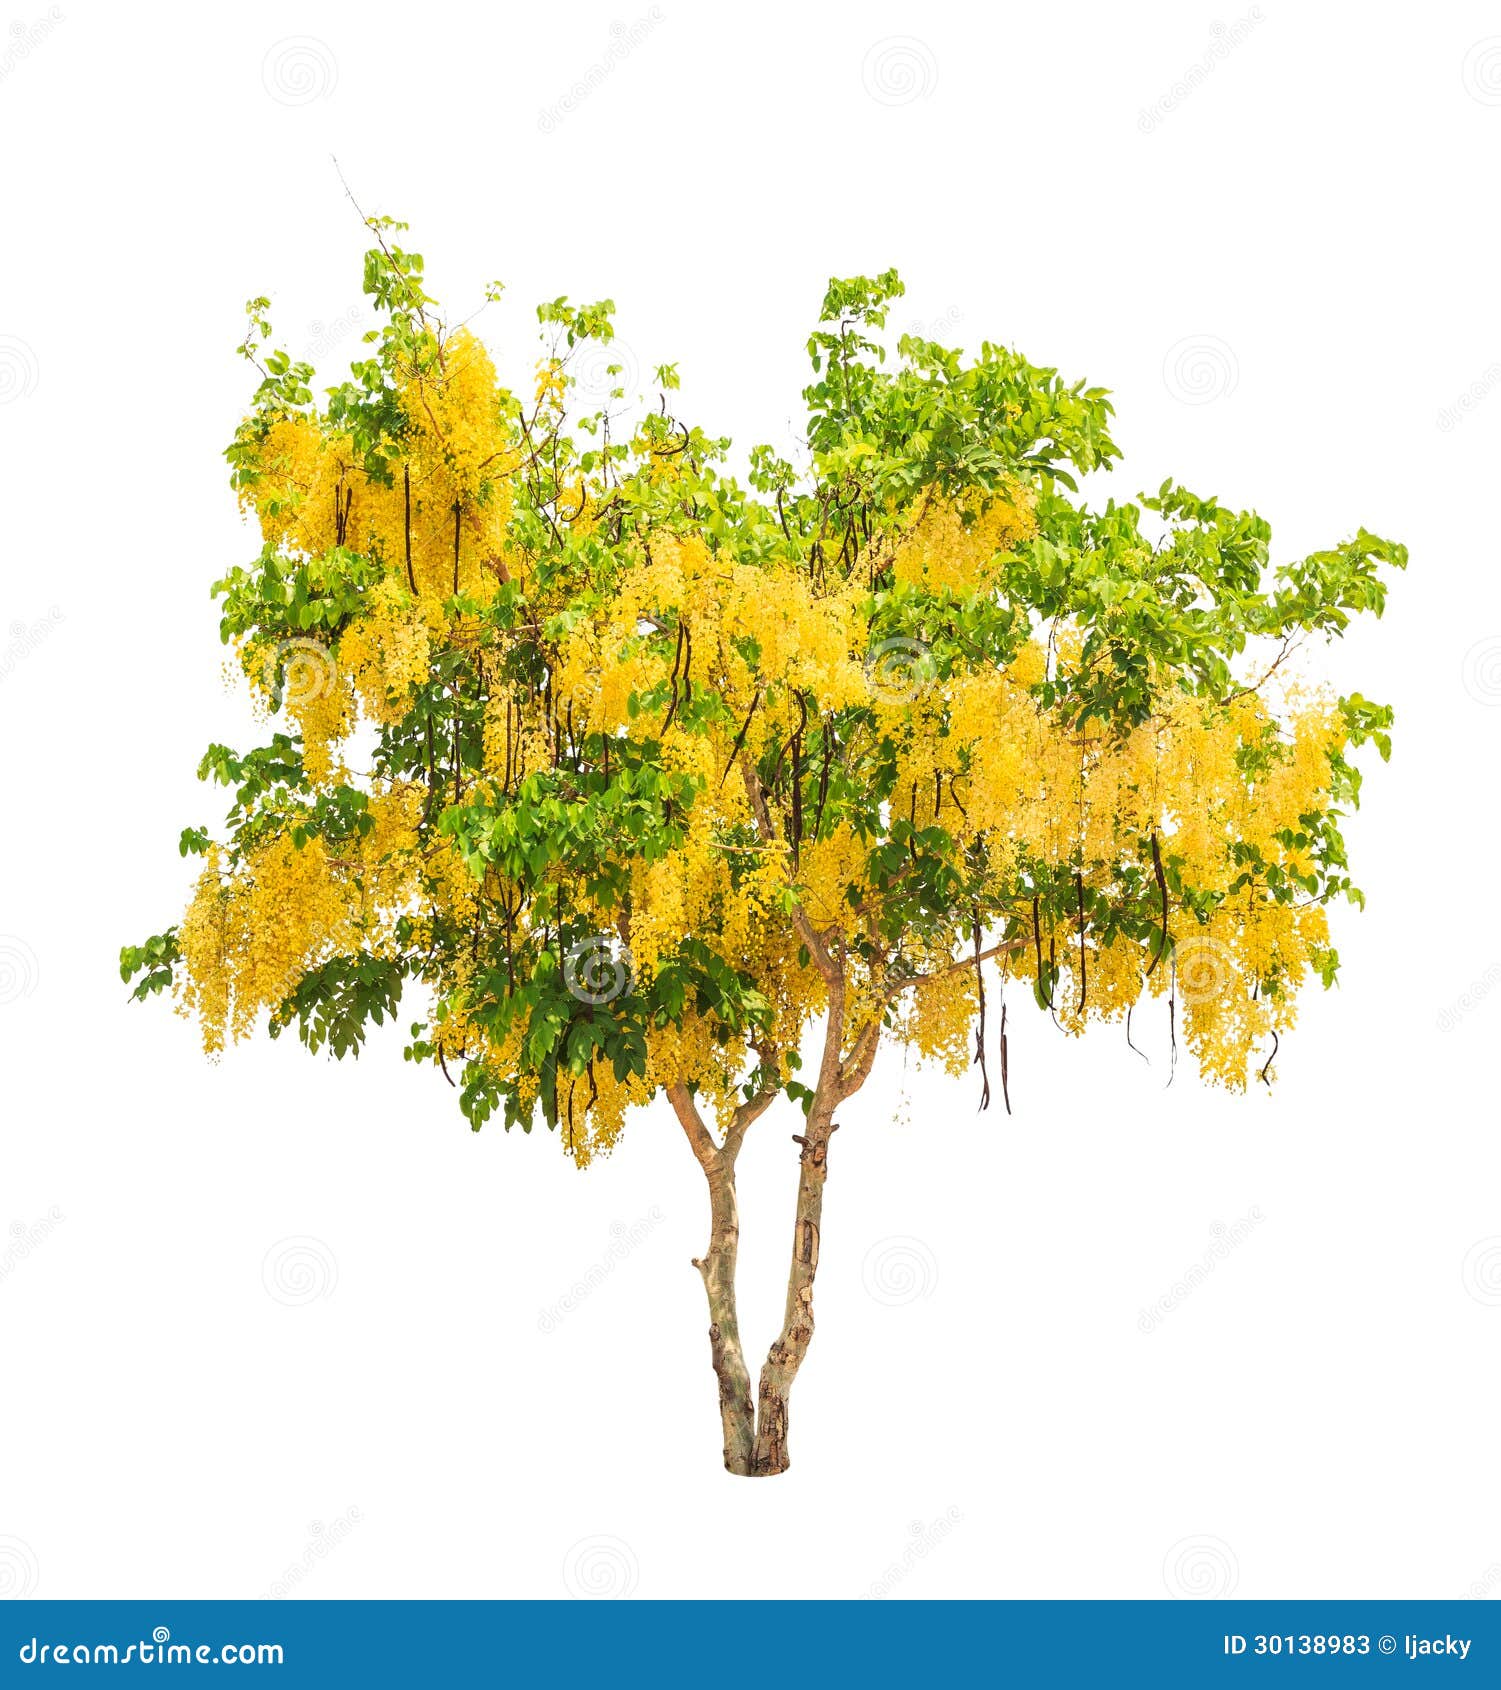 golden shower tree (cassia fistula)